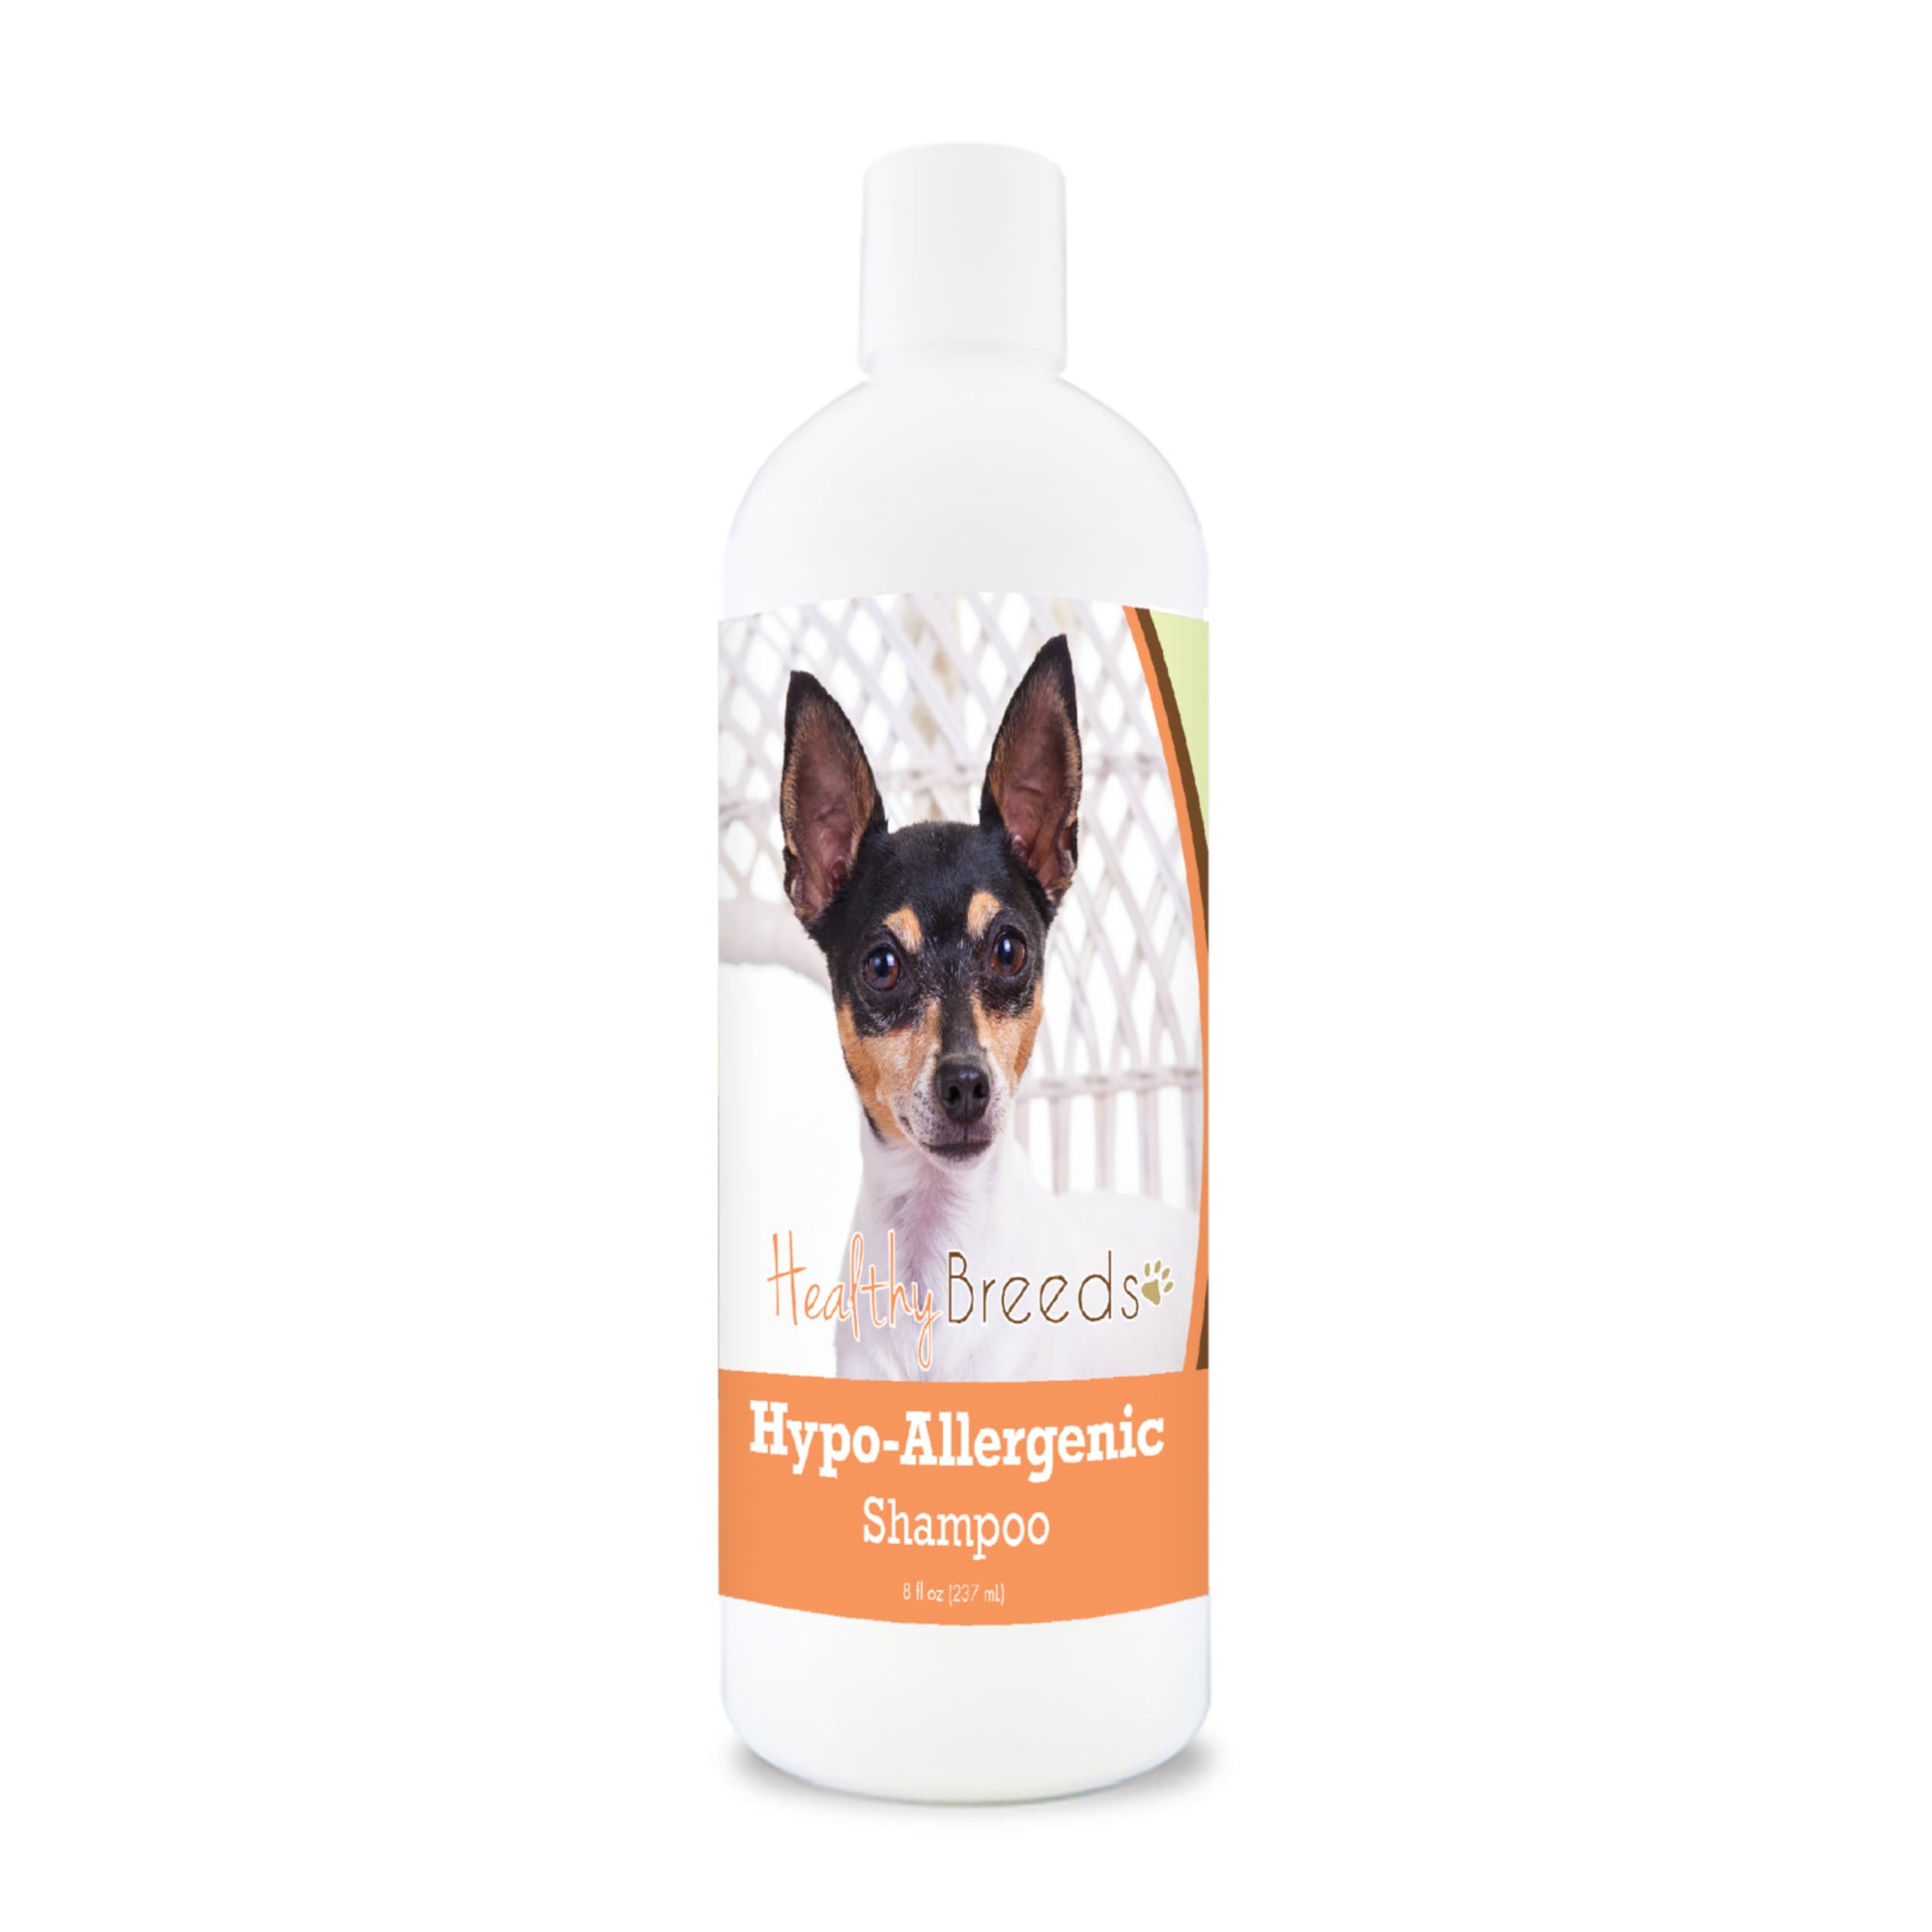 Toy Fox Terrier Hypo-Allergenic Shampoo 8 oz